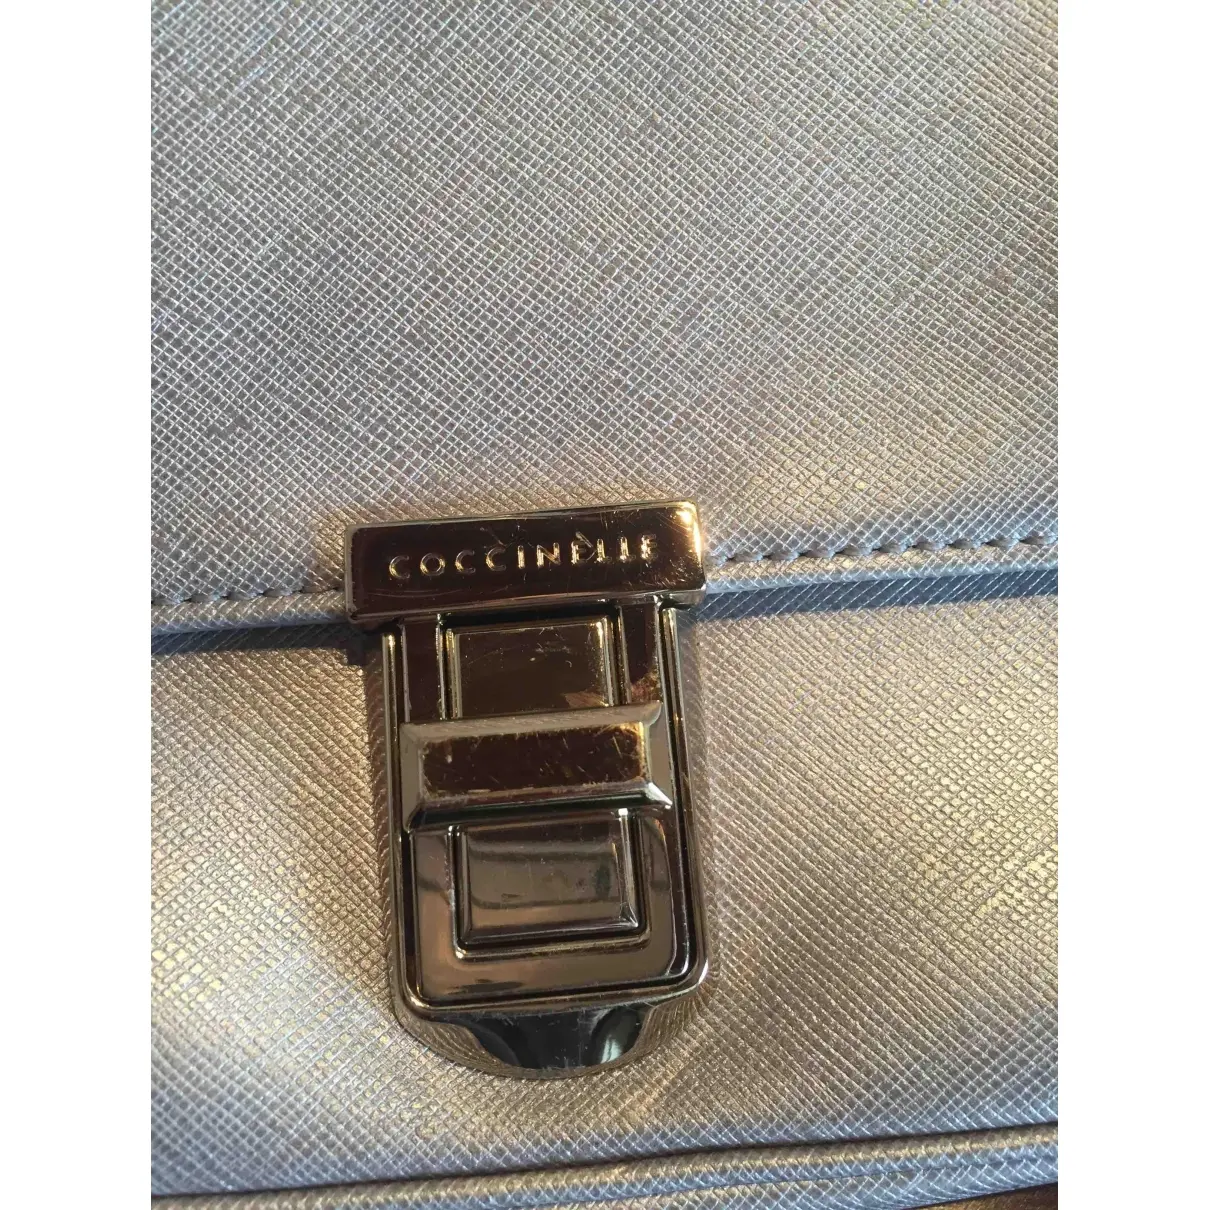 Buy Coccinelle Leather satchel online